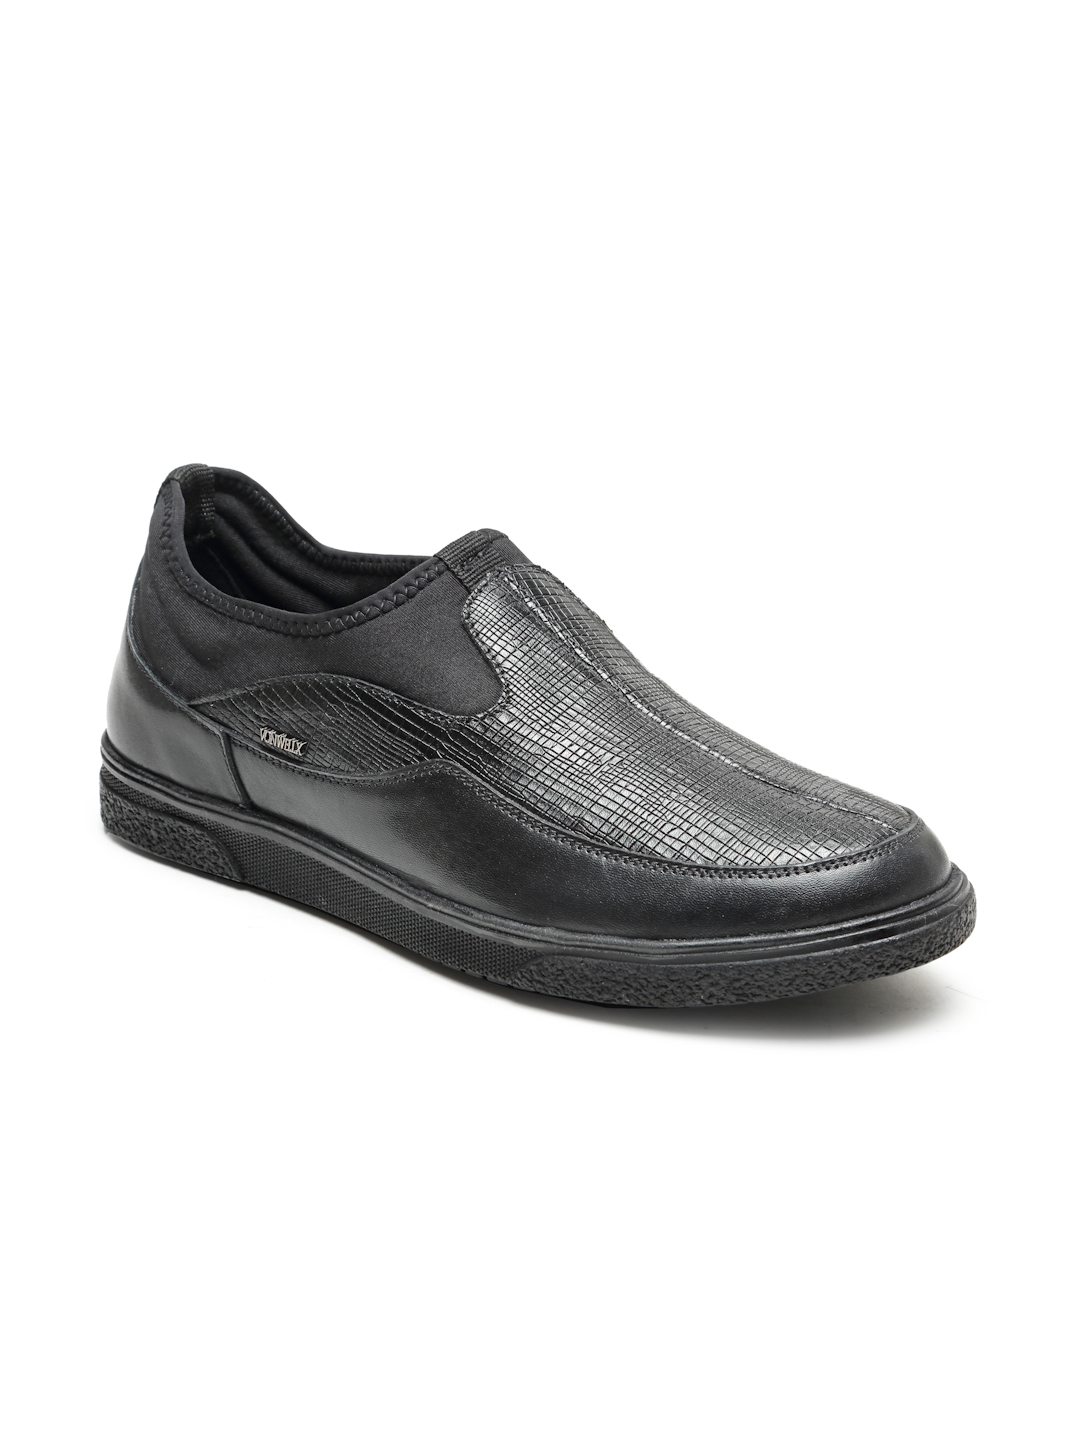 VON WELLX GERMANY comfort men's black casual loafers EVERETT